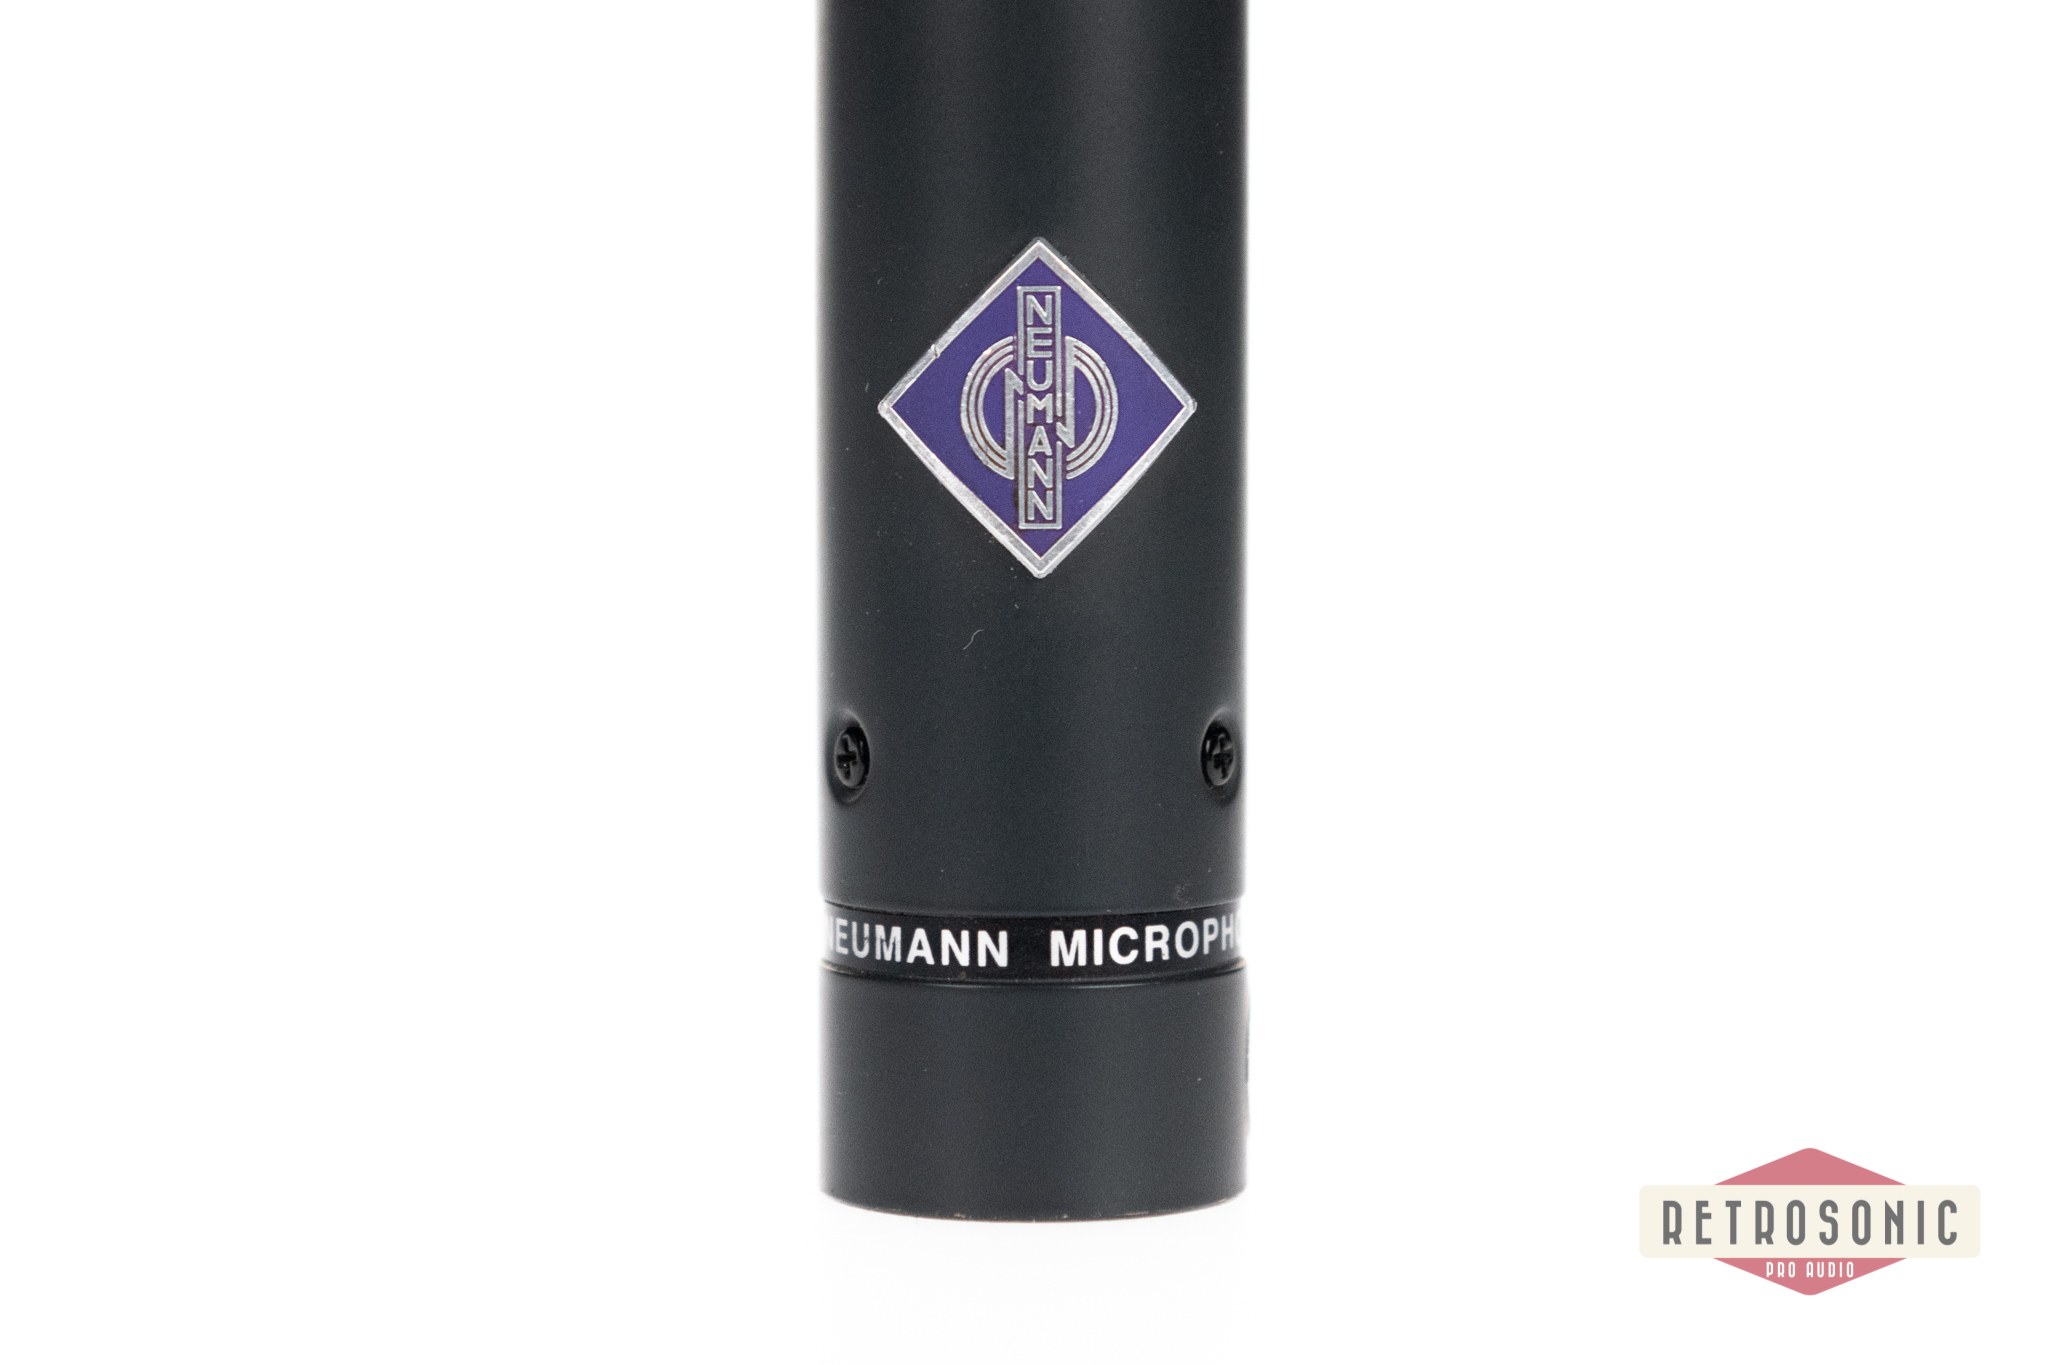 Neumann KMR81i Short Shotgun Microphone